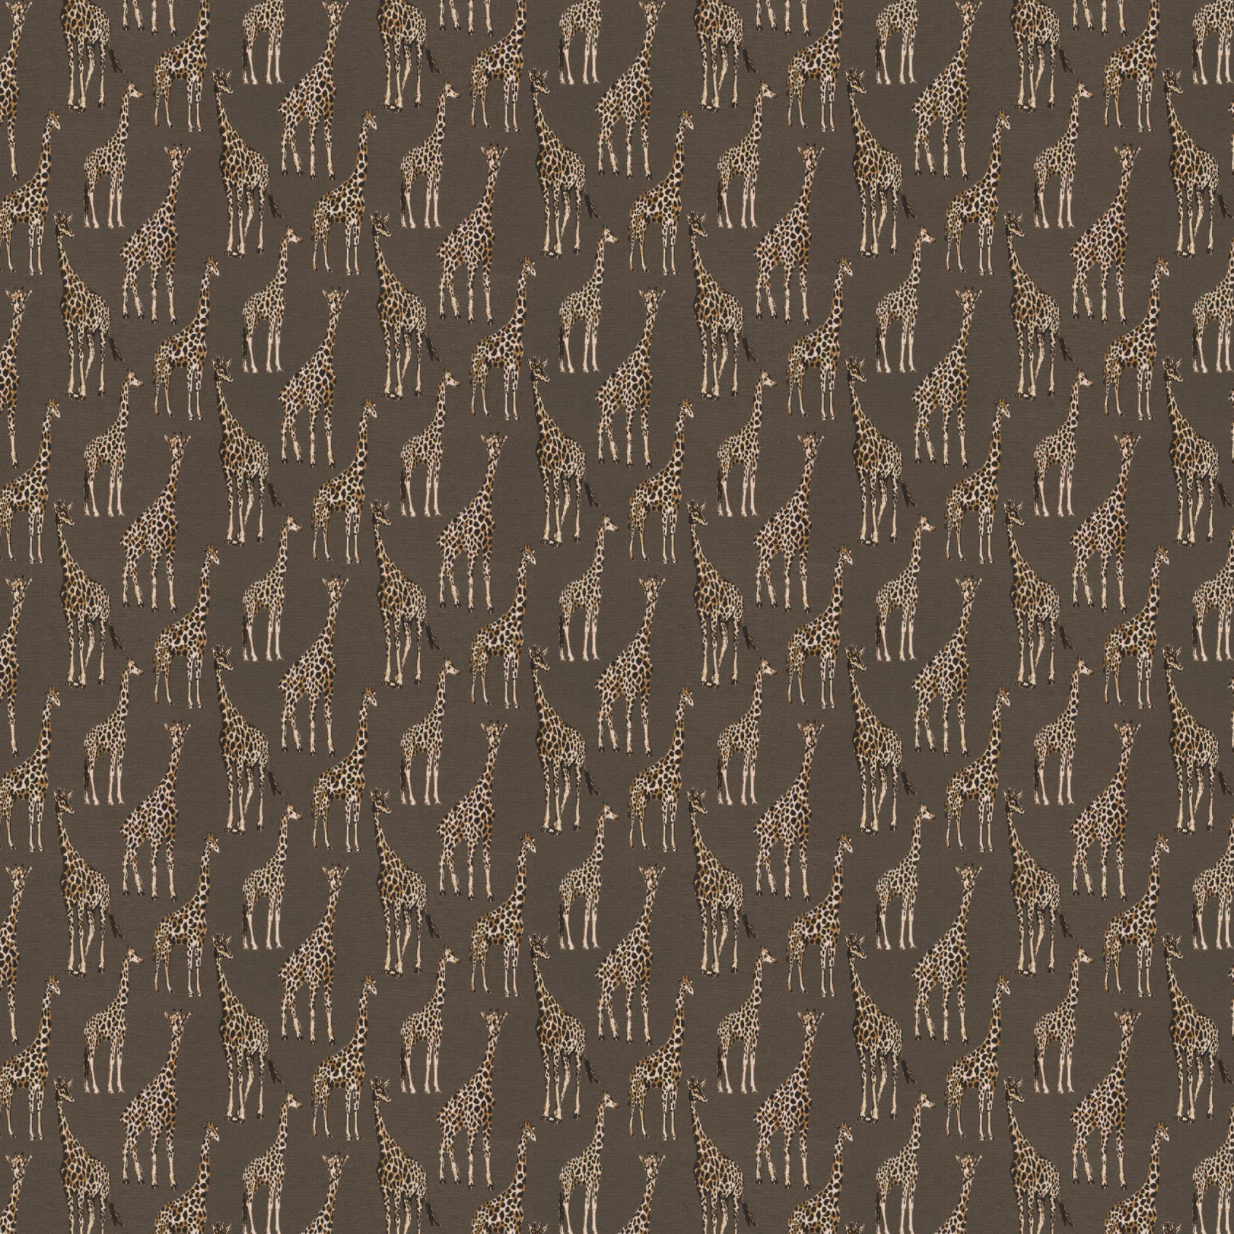 Giraffes 9-2473-020 Fabric